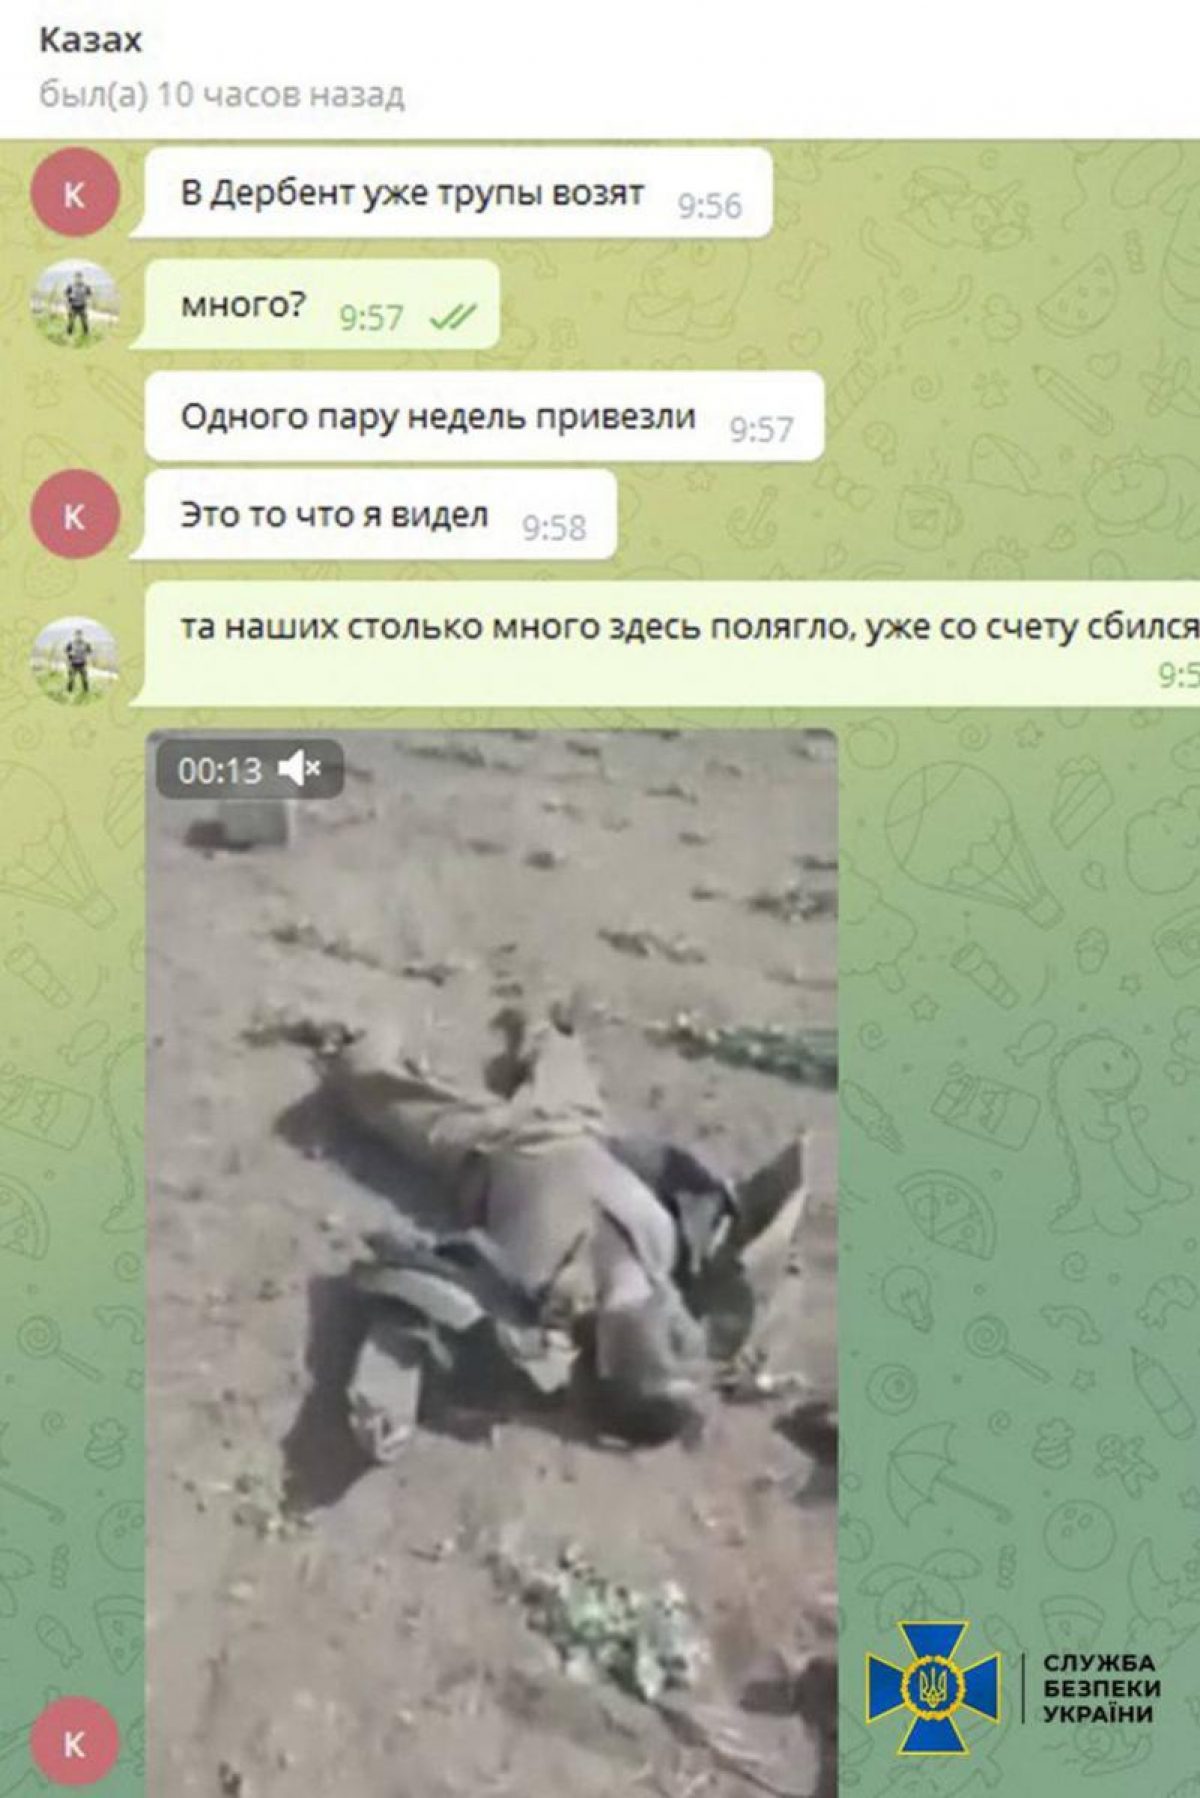 Война на украине телеграмм без цензуры украинский фото 76